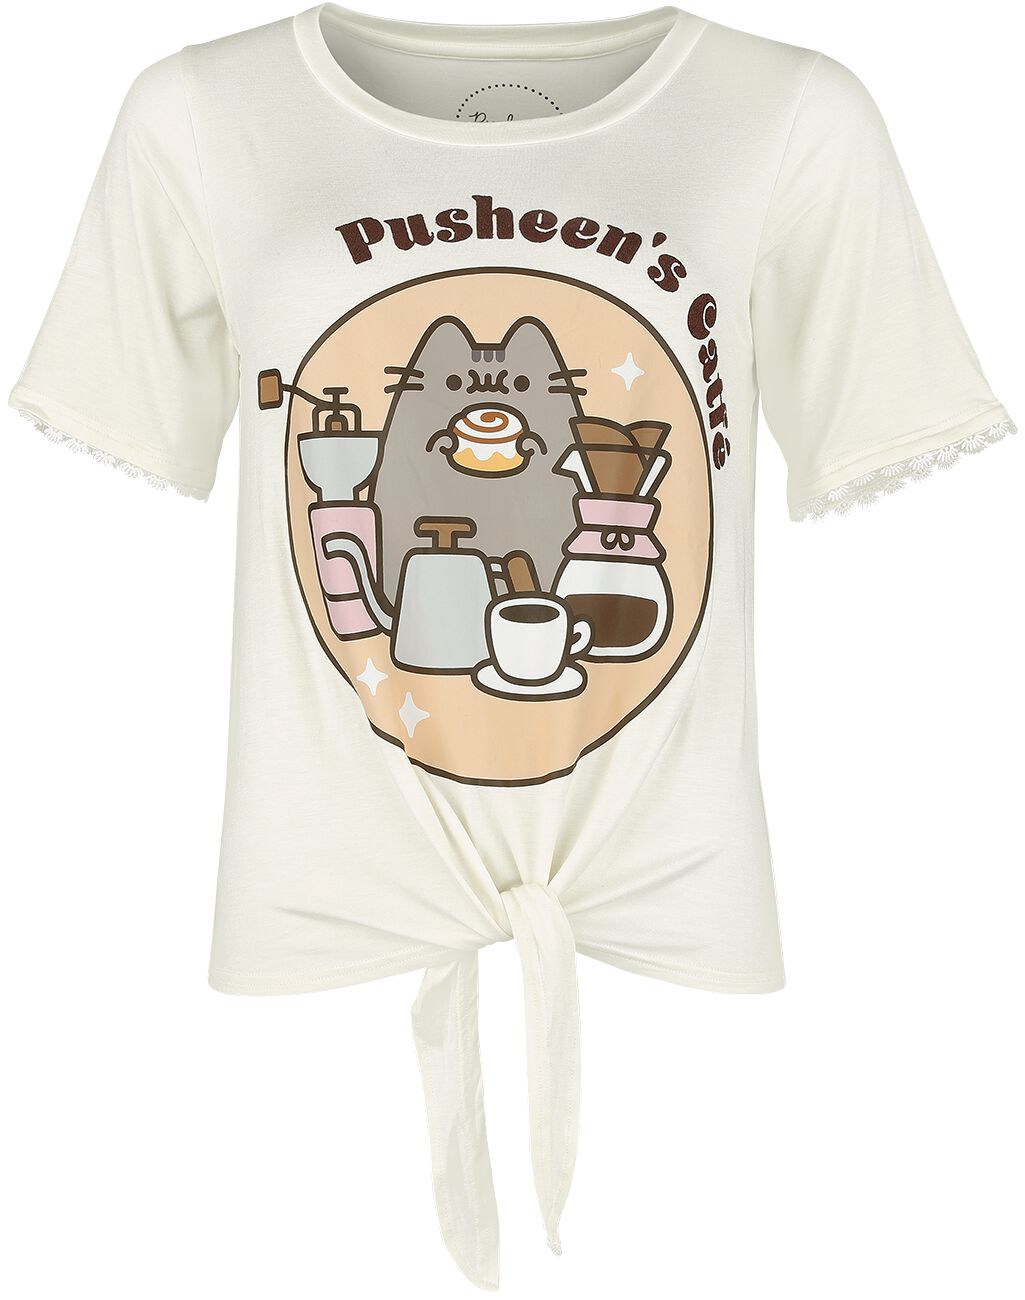 Pusheen Meowcaron T-Shirt grey white